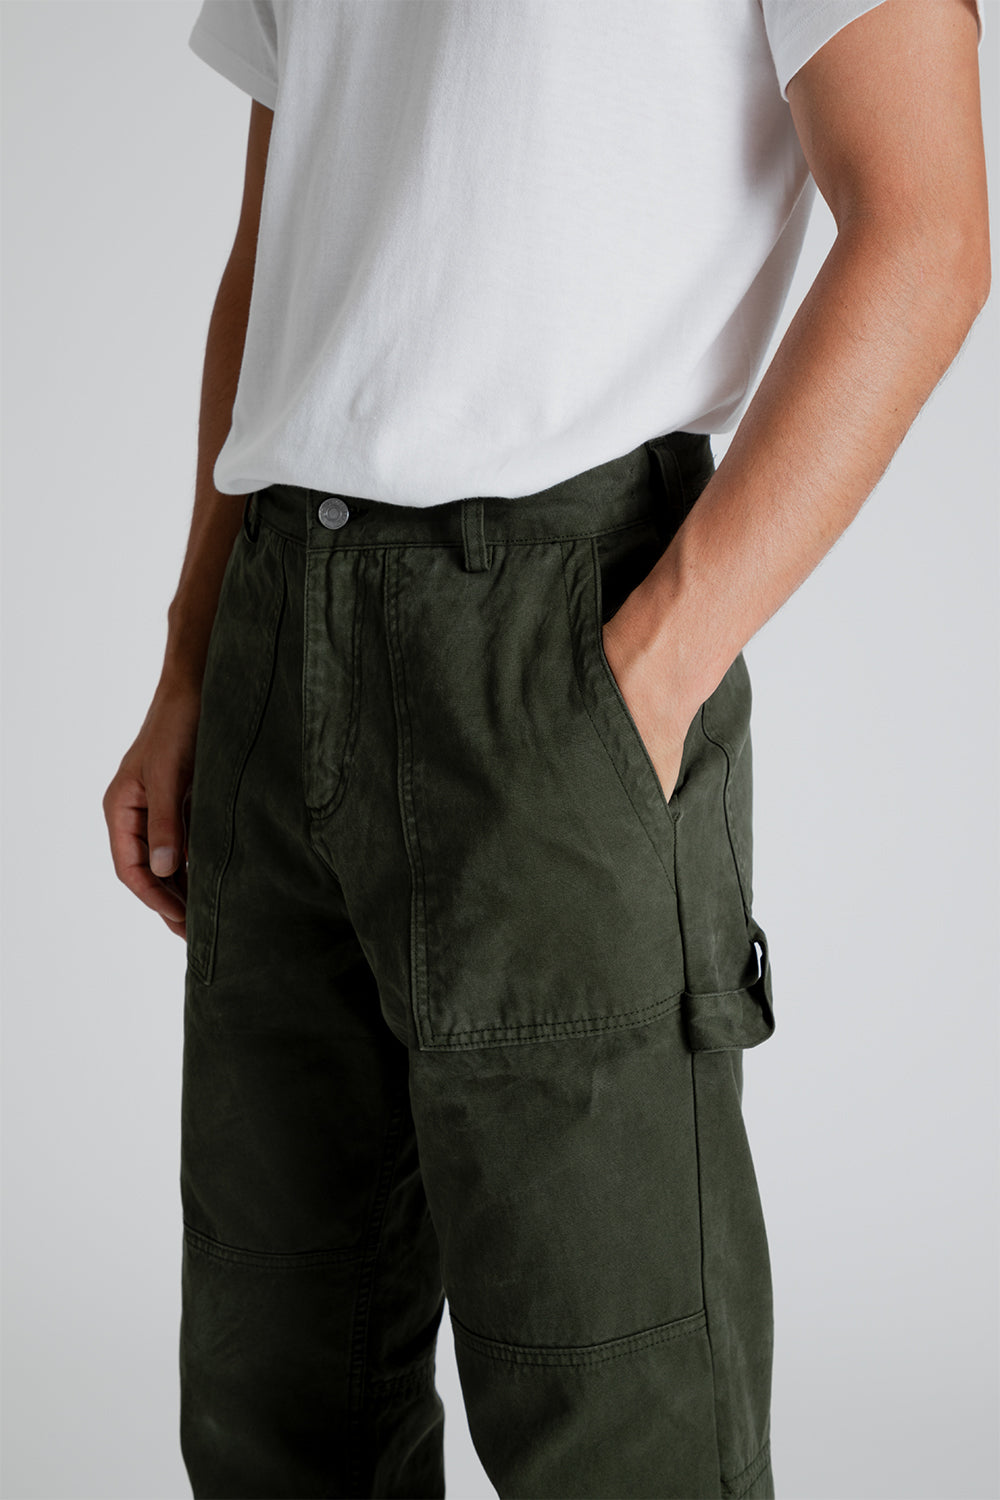 Schnayderman's Trousers Workwear Stone Washed in Dark Green